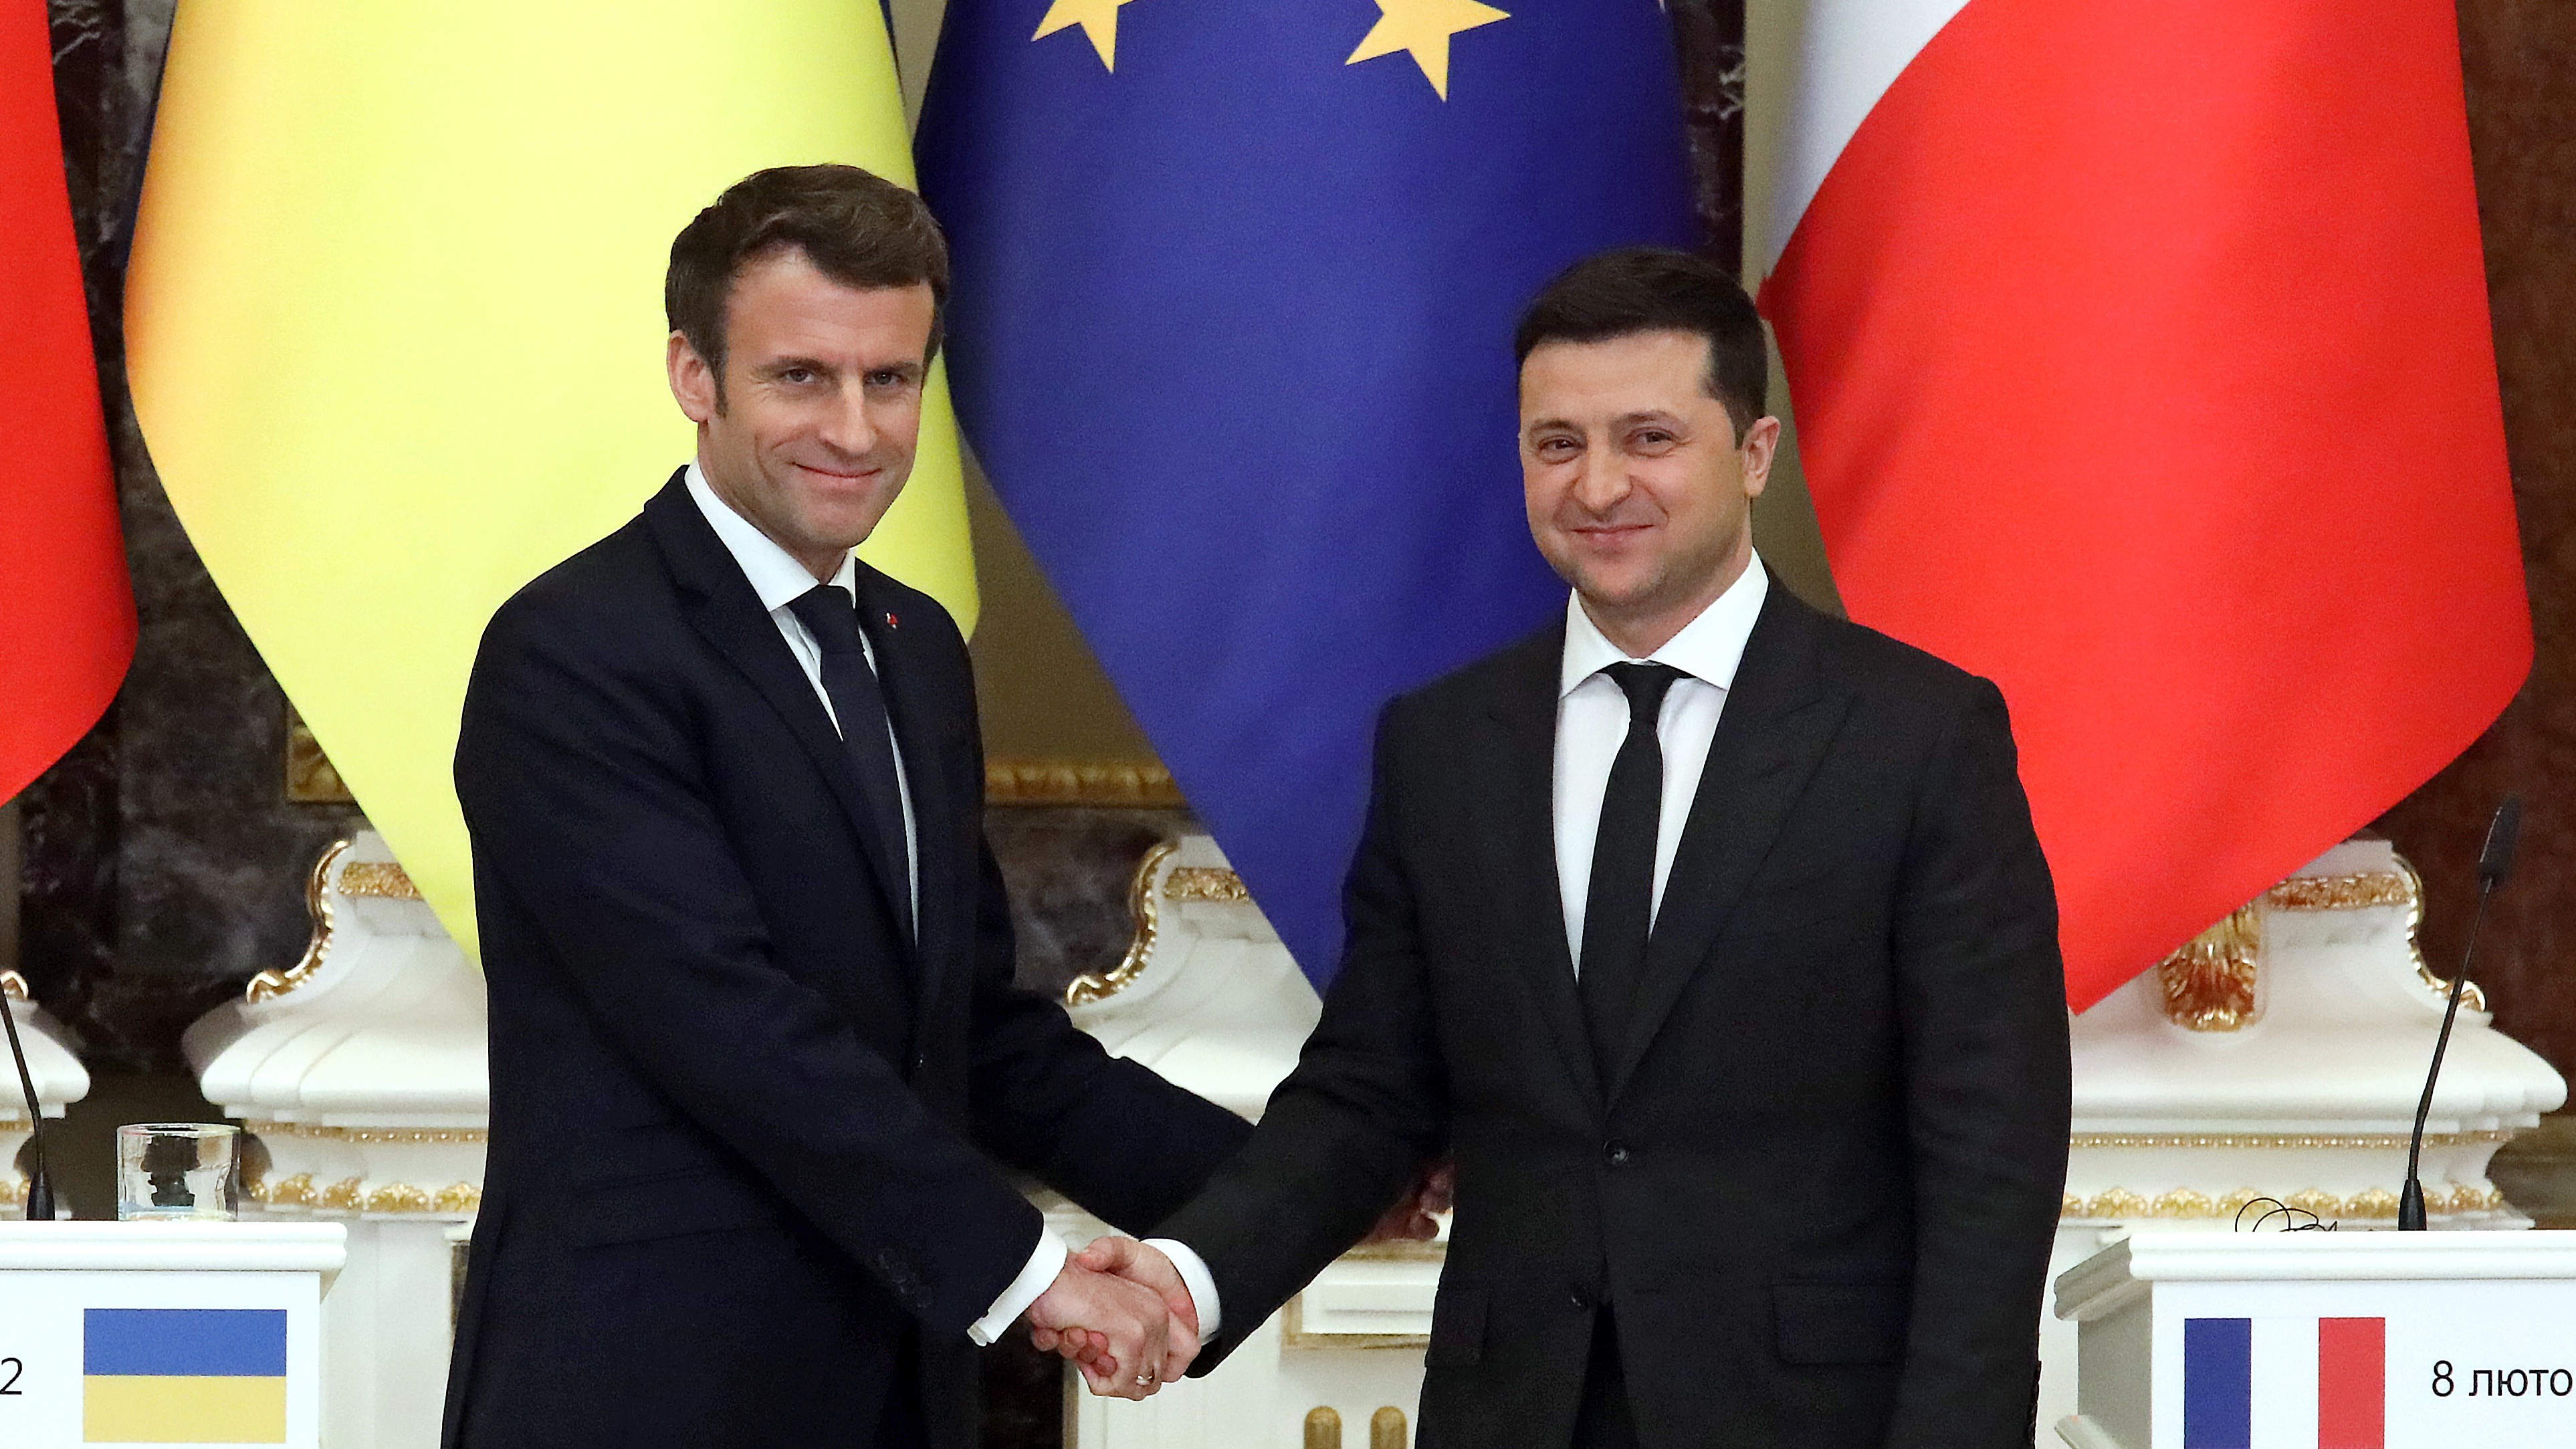 Emmanuel Macron shakes hands with Ukrainian President Volodymyr Zelensky in Kiev